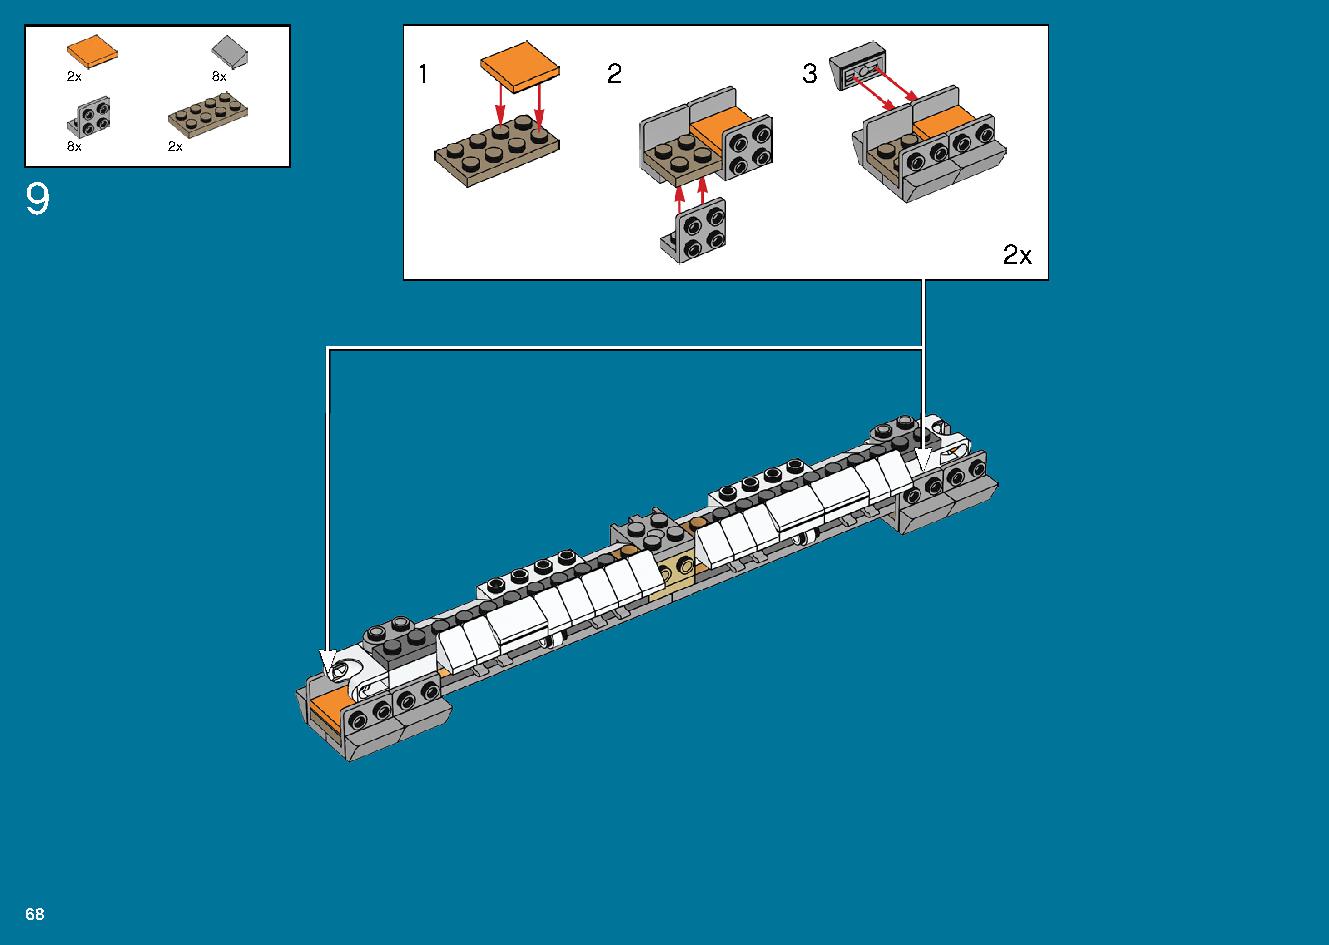 International Space Station 21321 レゴの商品情報 レゴの説明書・組立方法 68 page